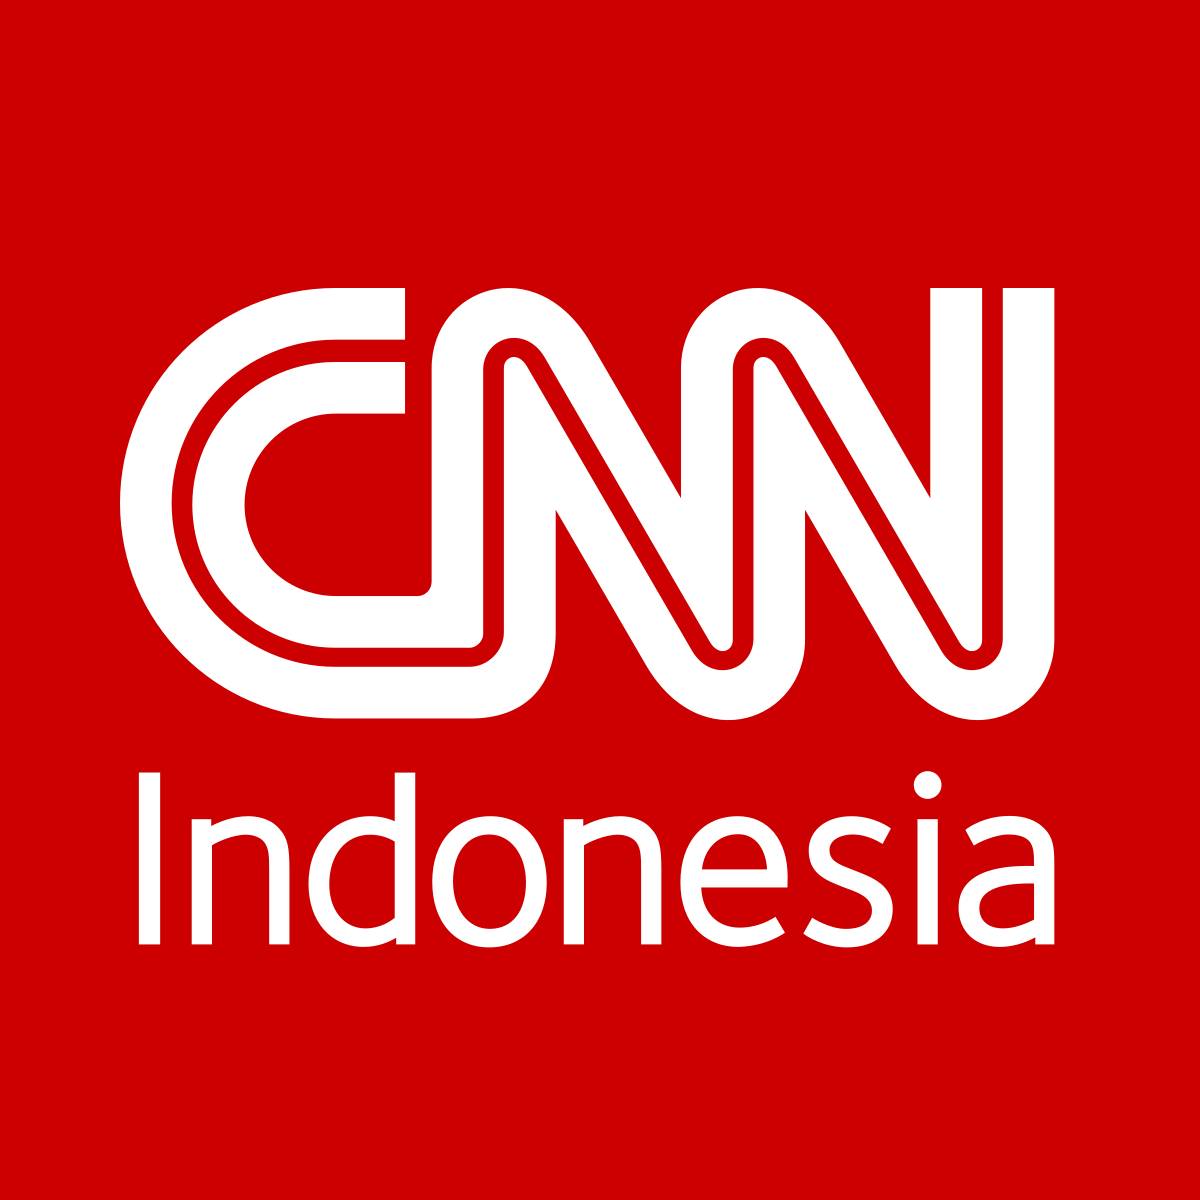 Cnn Indonesia Png - KibrisPDR